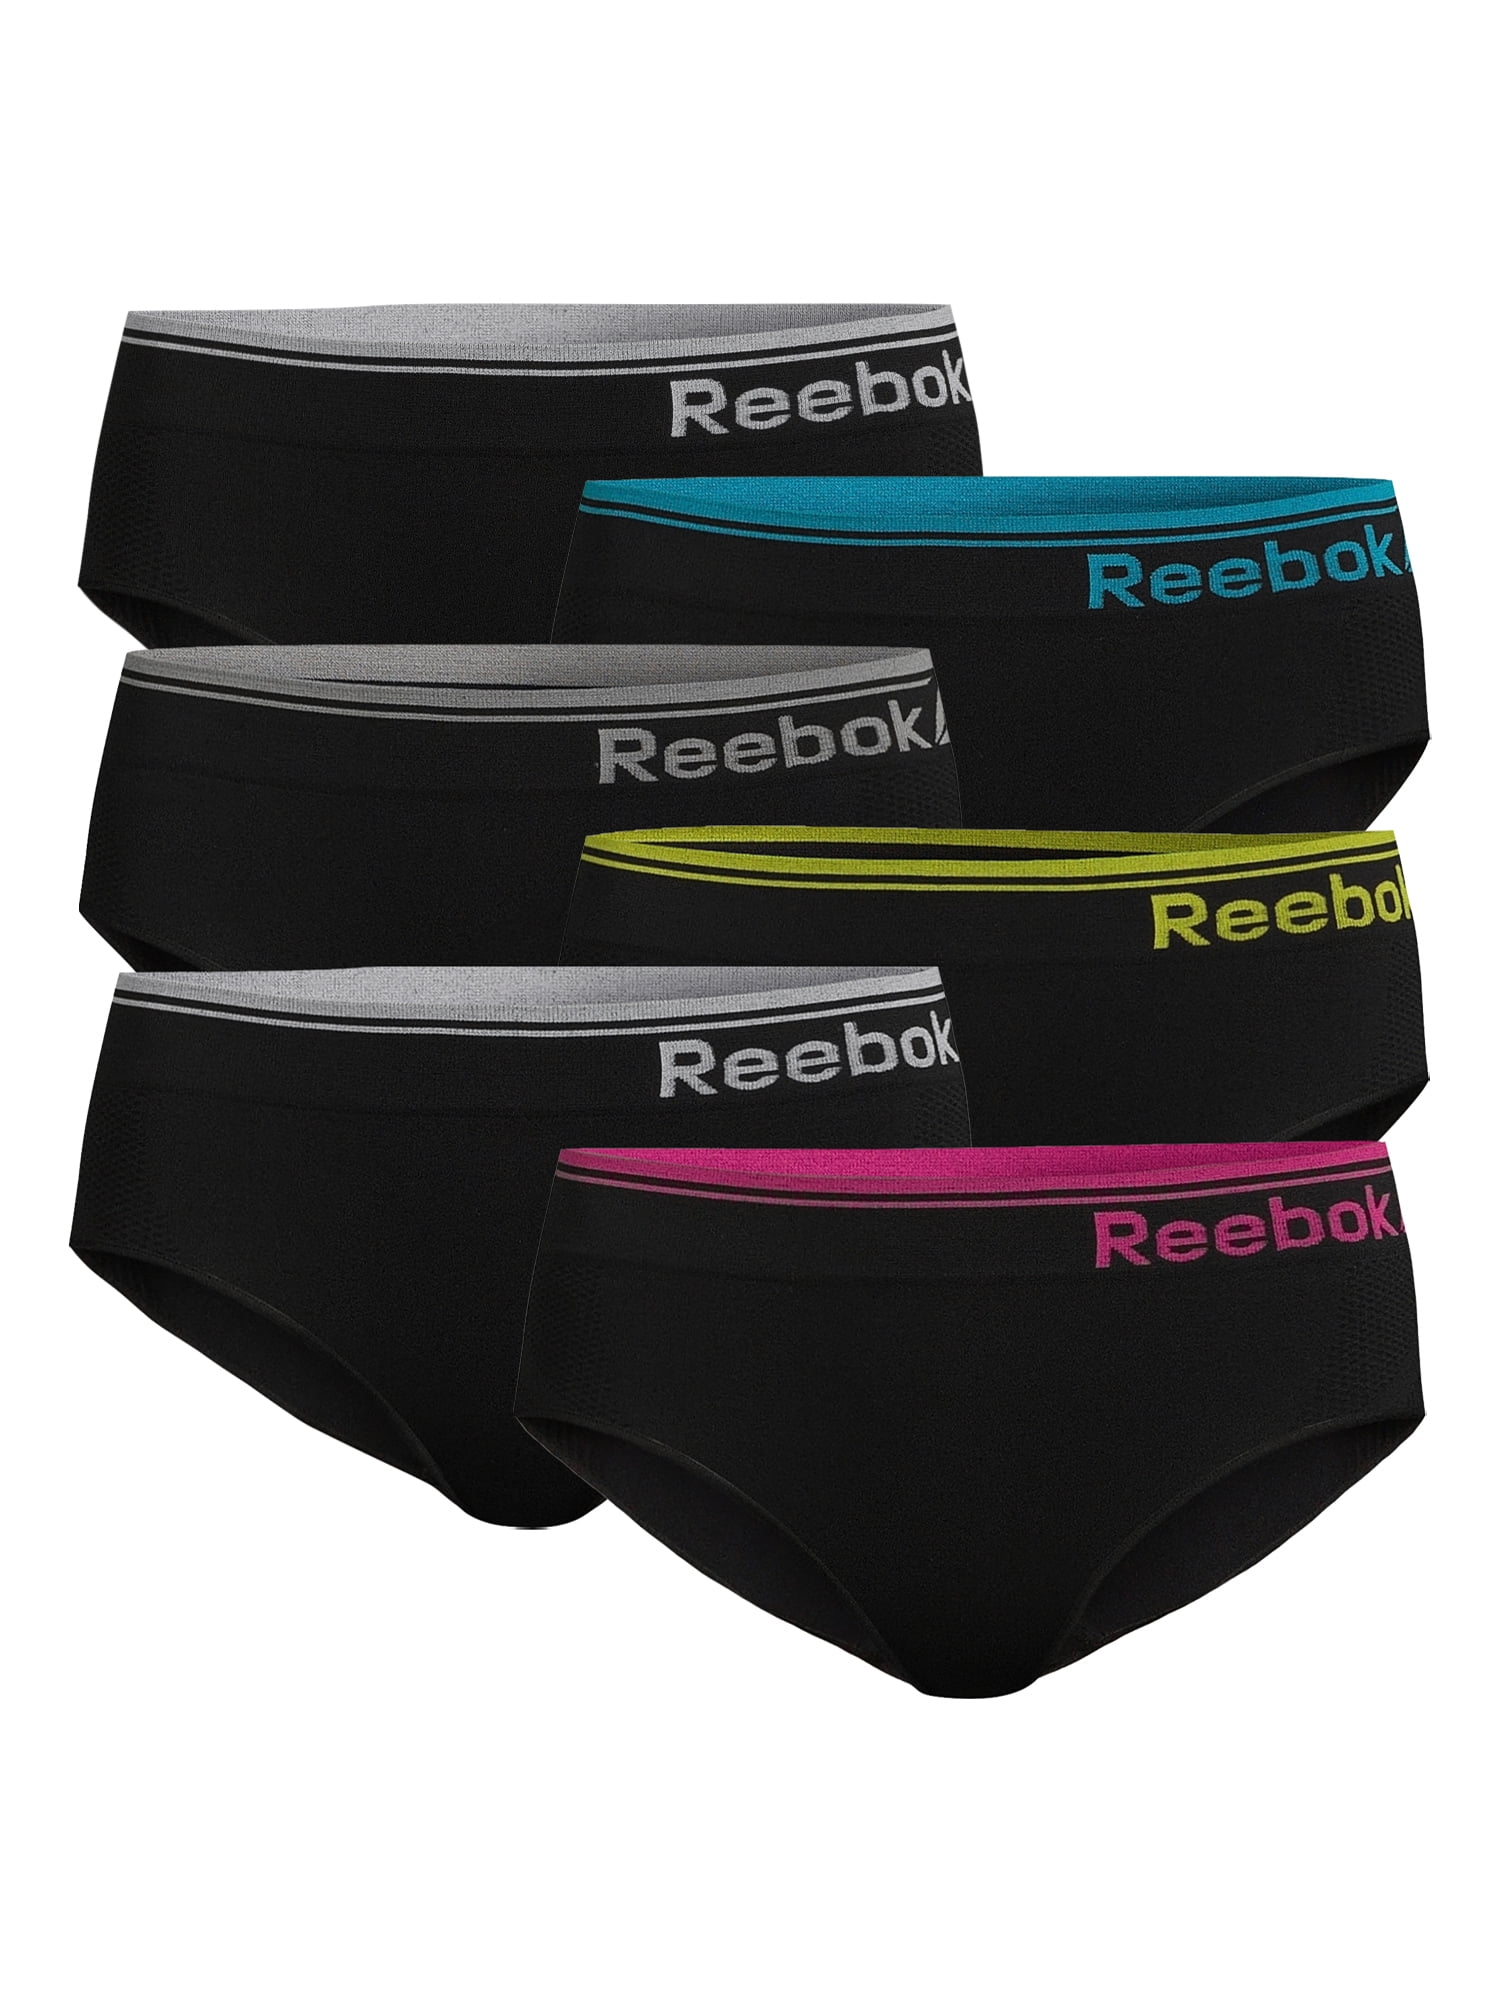 Reebok Women's Seamless Hipster, 6-Pack, Sizes XS-3XL